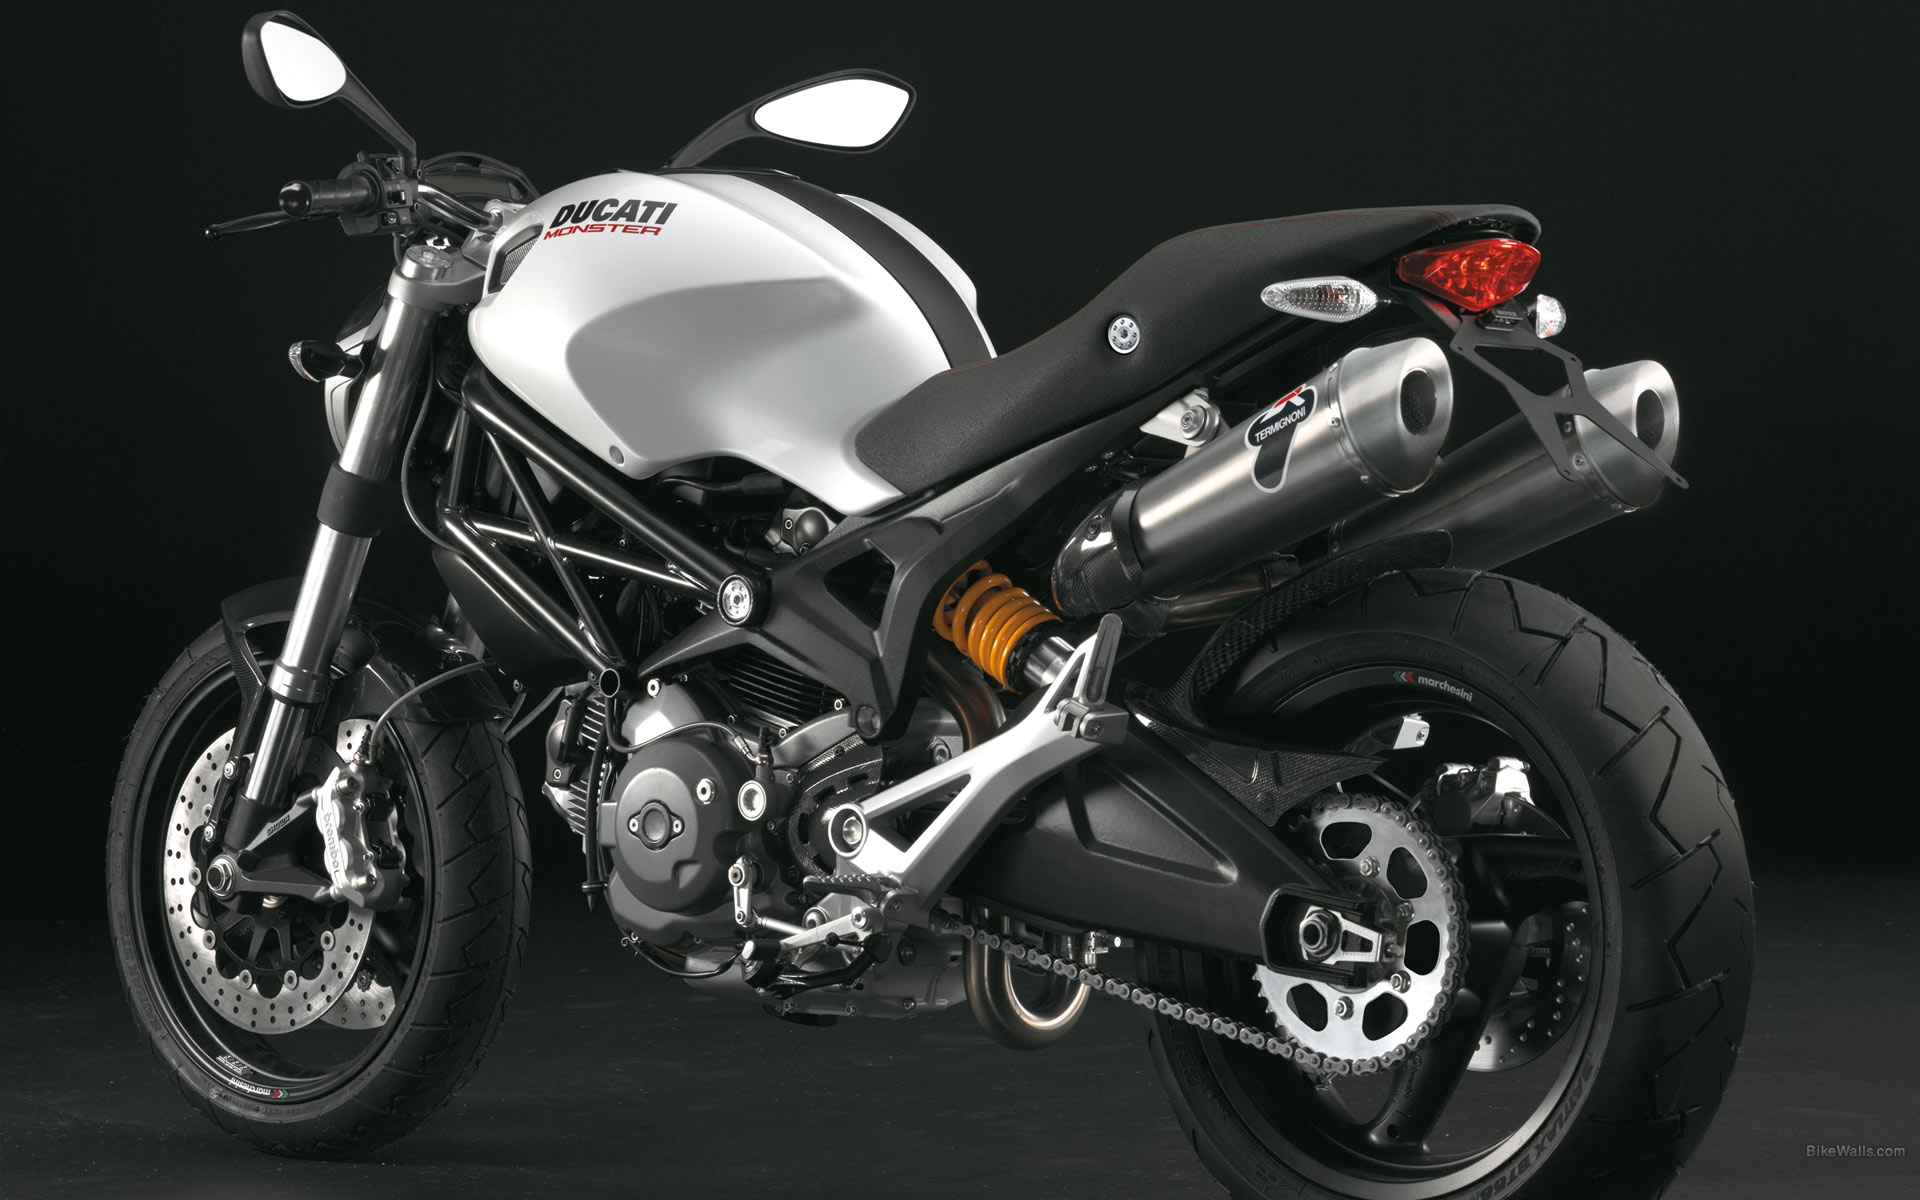 Обзор мотоцикла Ducati Monster 696